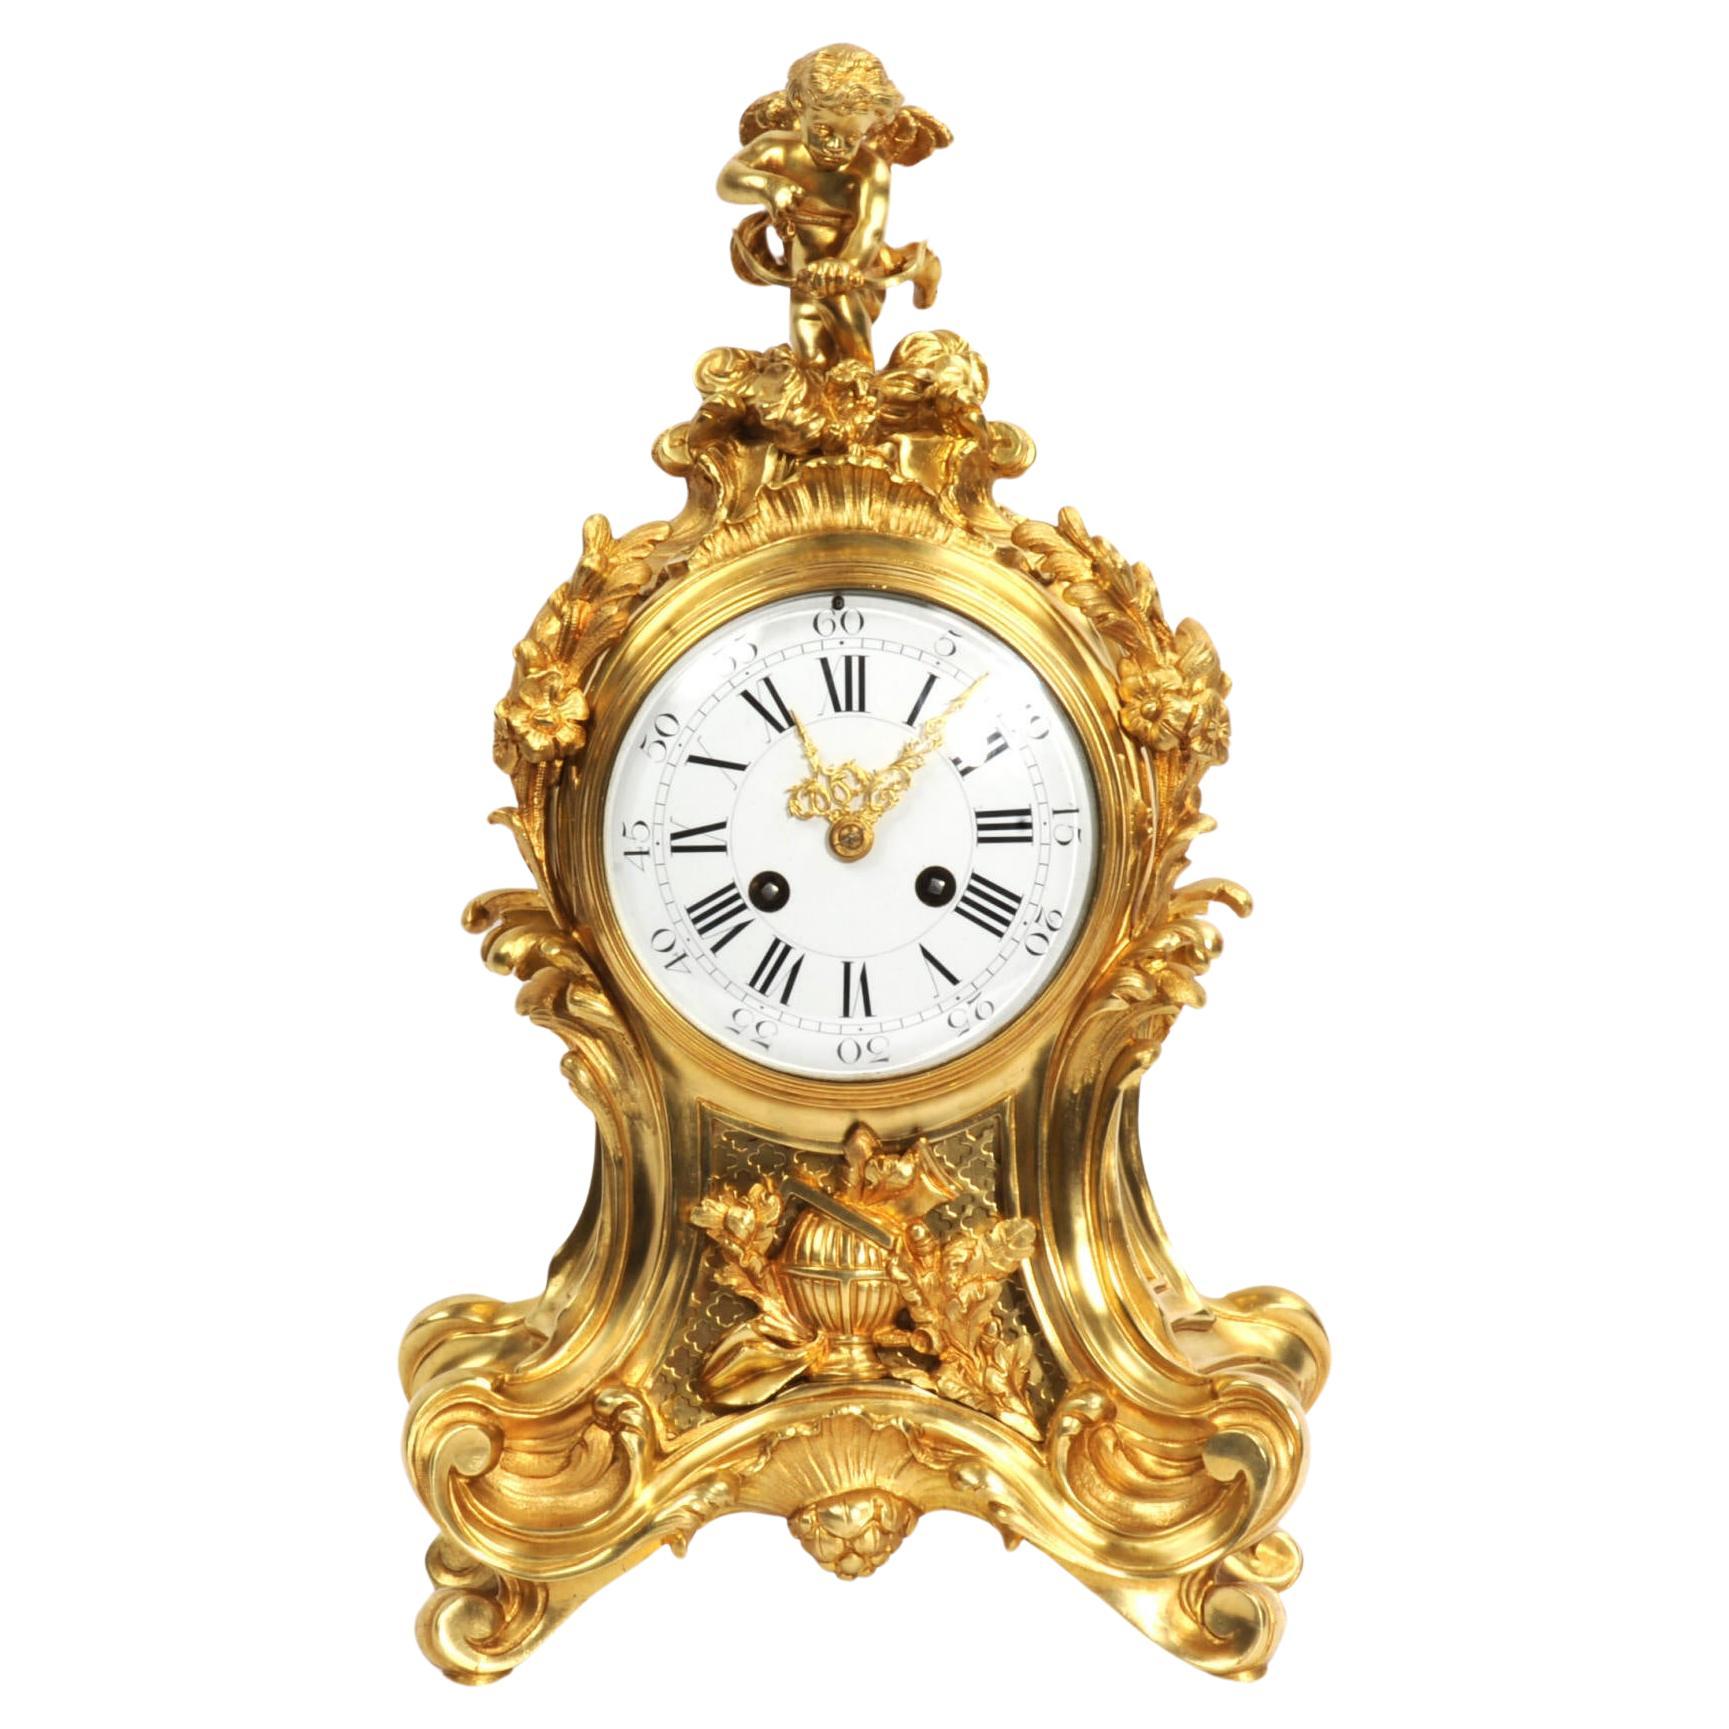 Belle horloge rococo française ancienne en bronze doré - Cupidon en vente